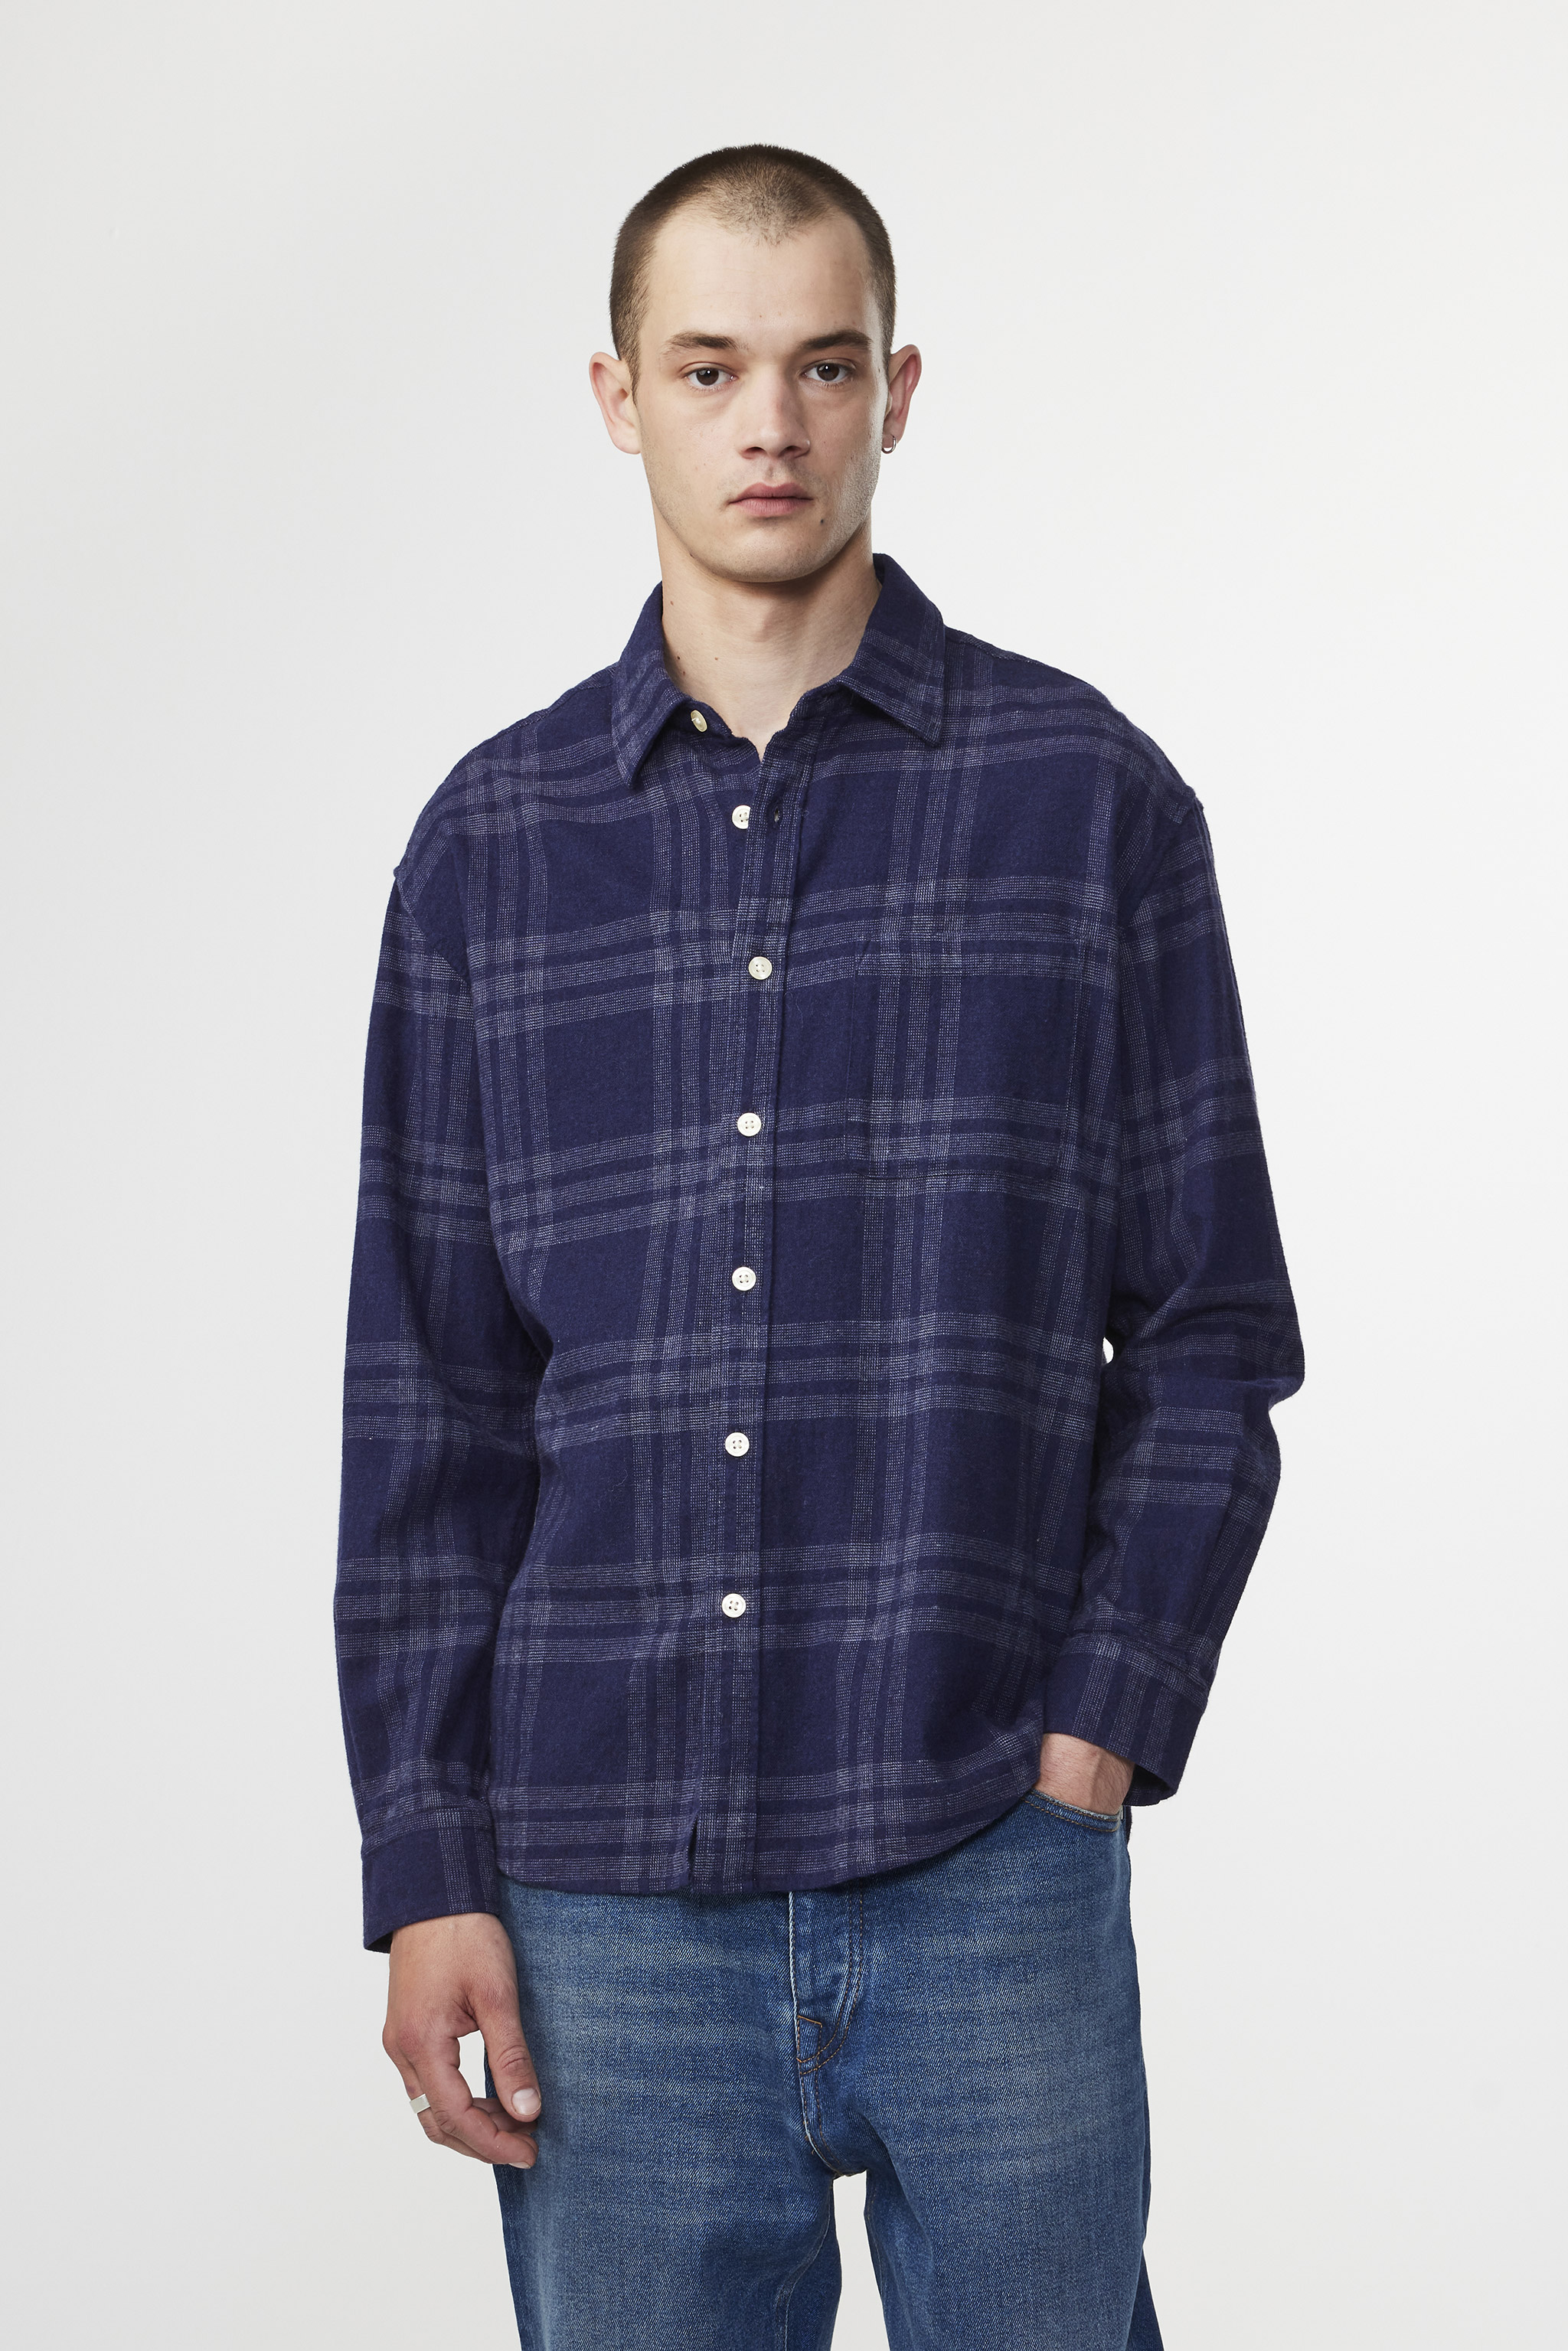 Deon 5465 men's shirt - Blue Check - Buy online at NN.07®